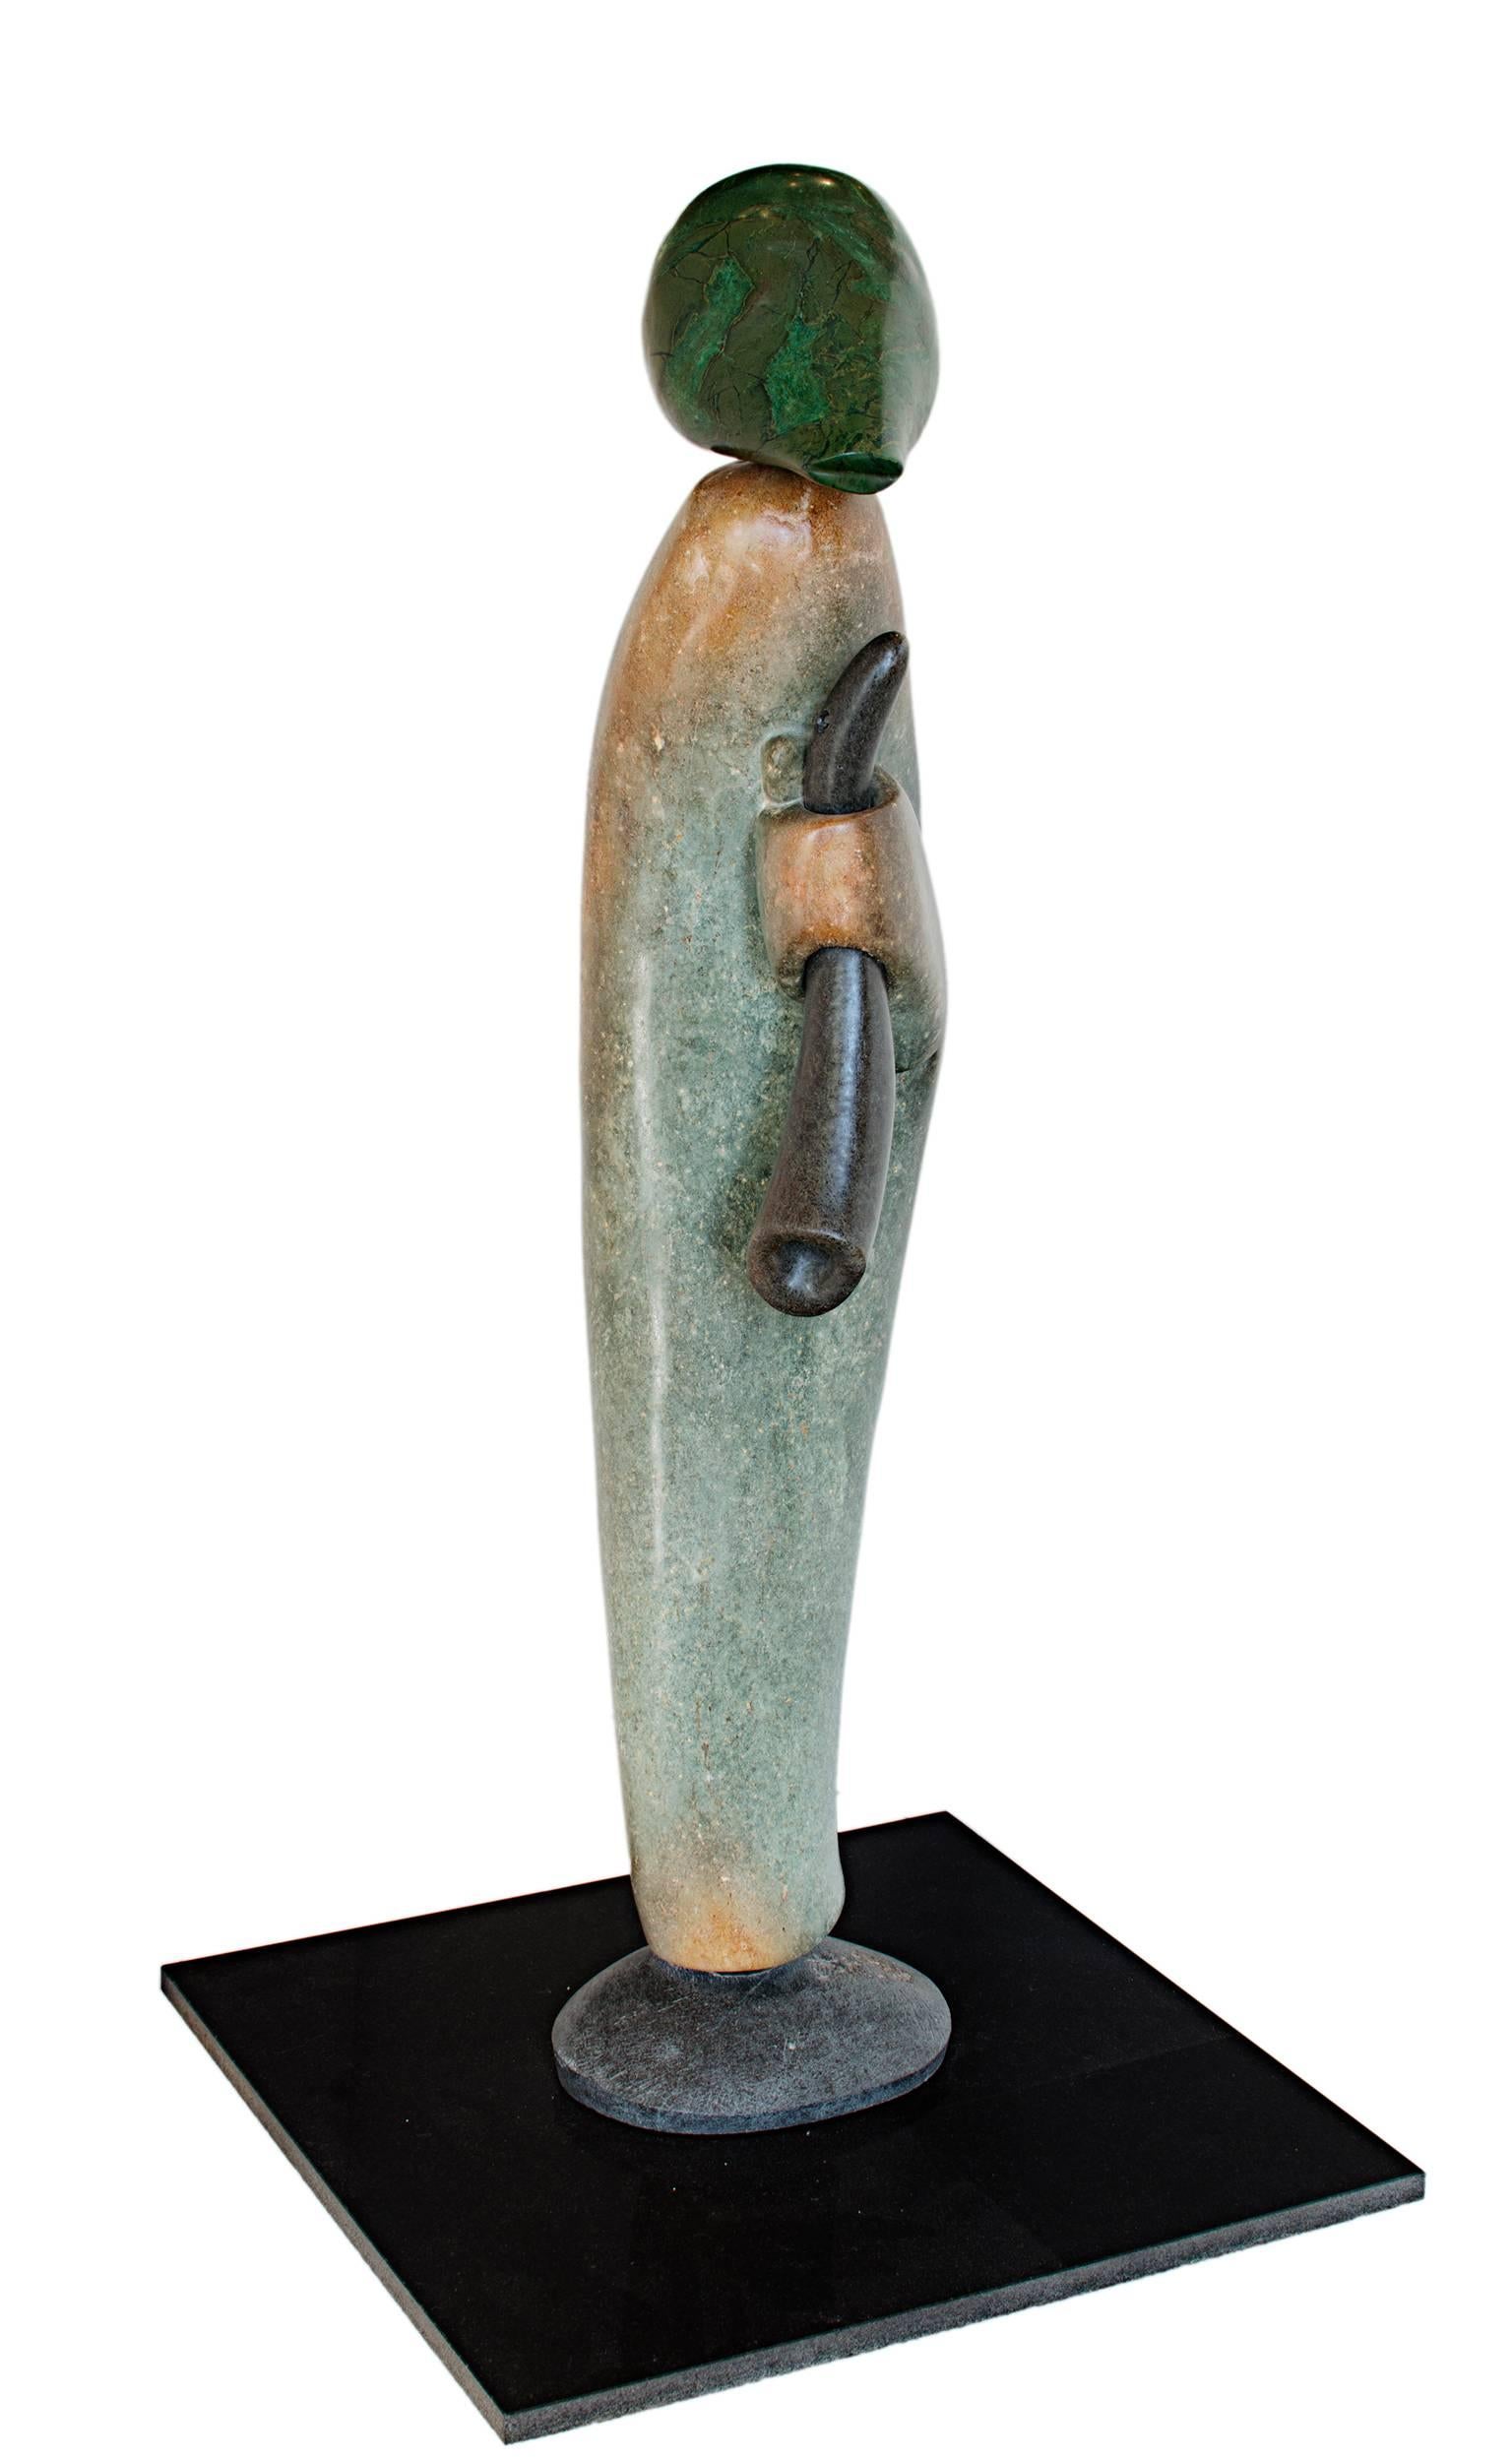 Aaron Perkins Chikumbirike Figurative Sculpture - "Spirit Medium, " Yellow Opal, Green Jade, & Opaline signed by Aaron Chikumbirike